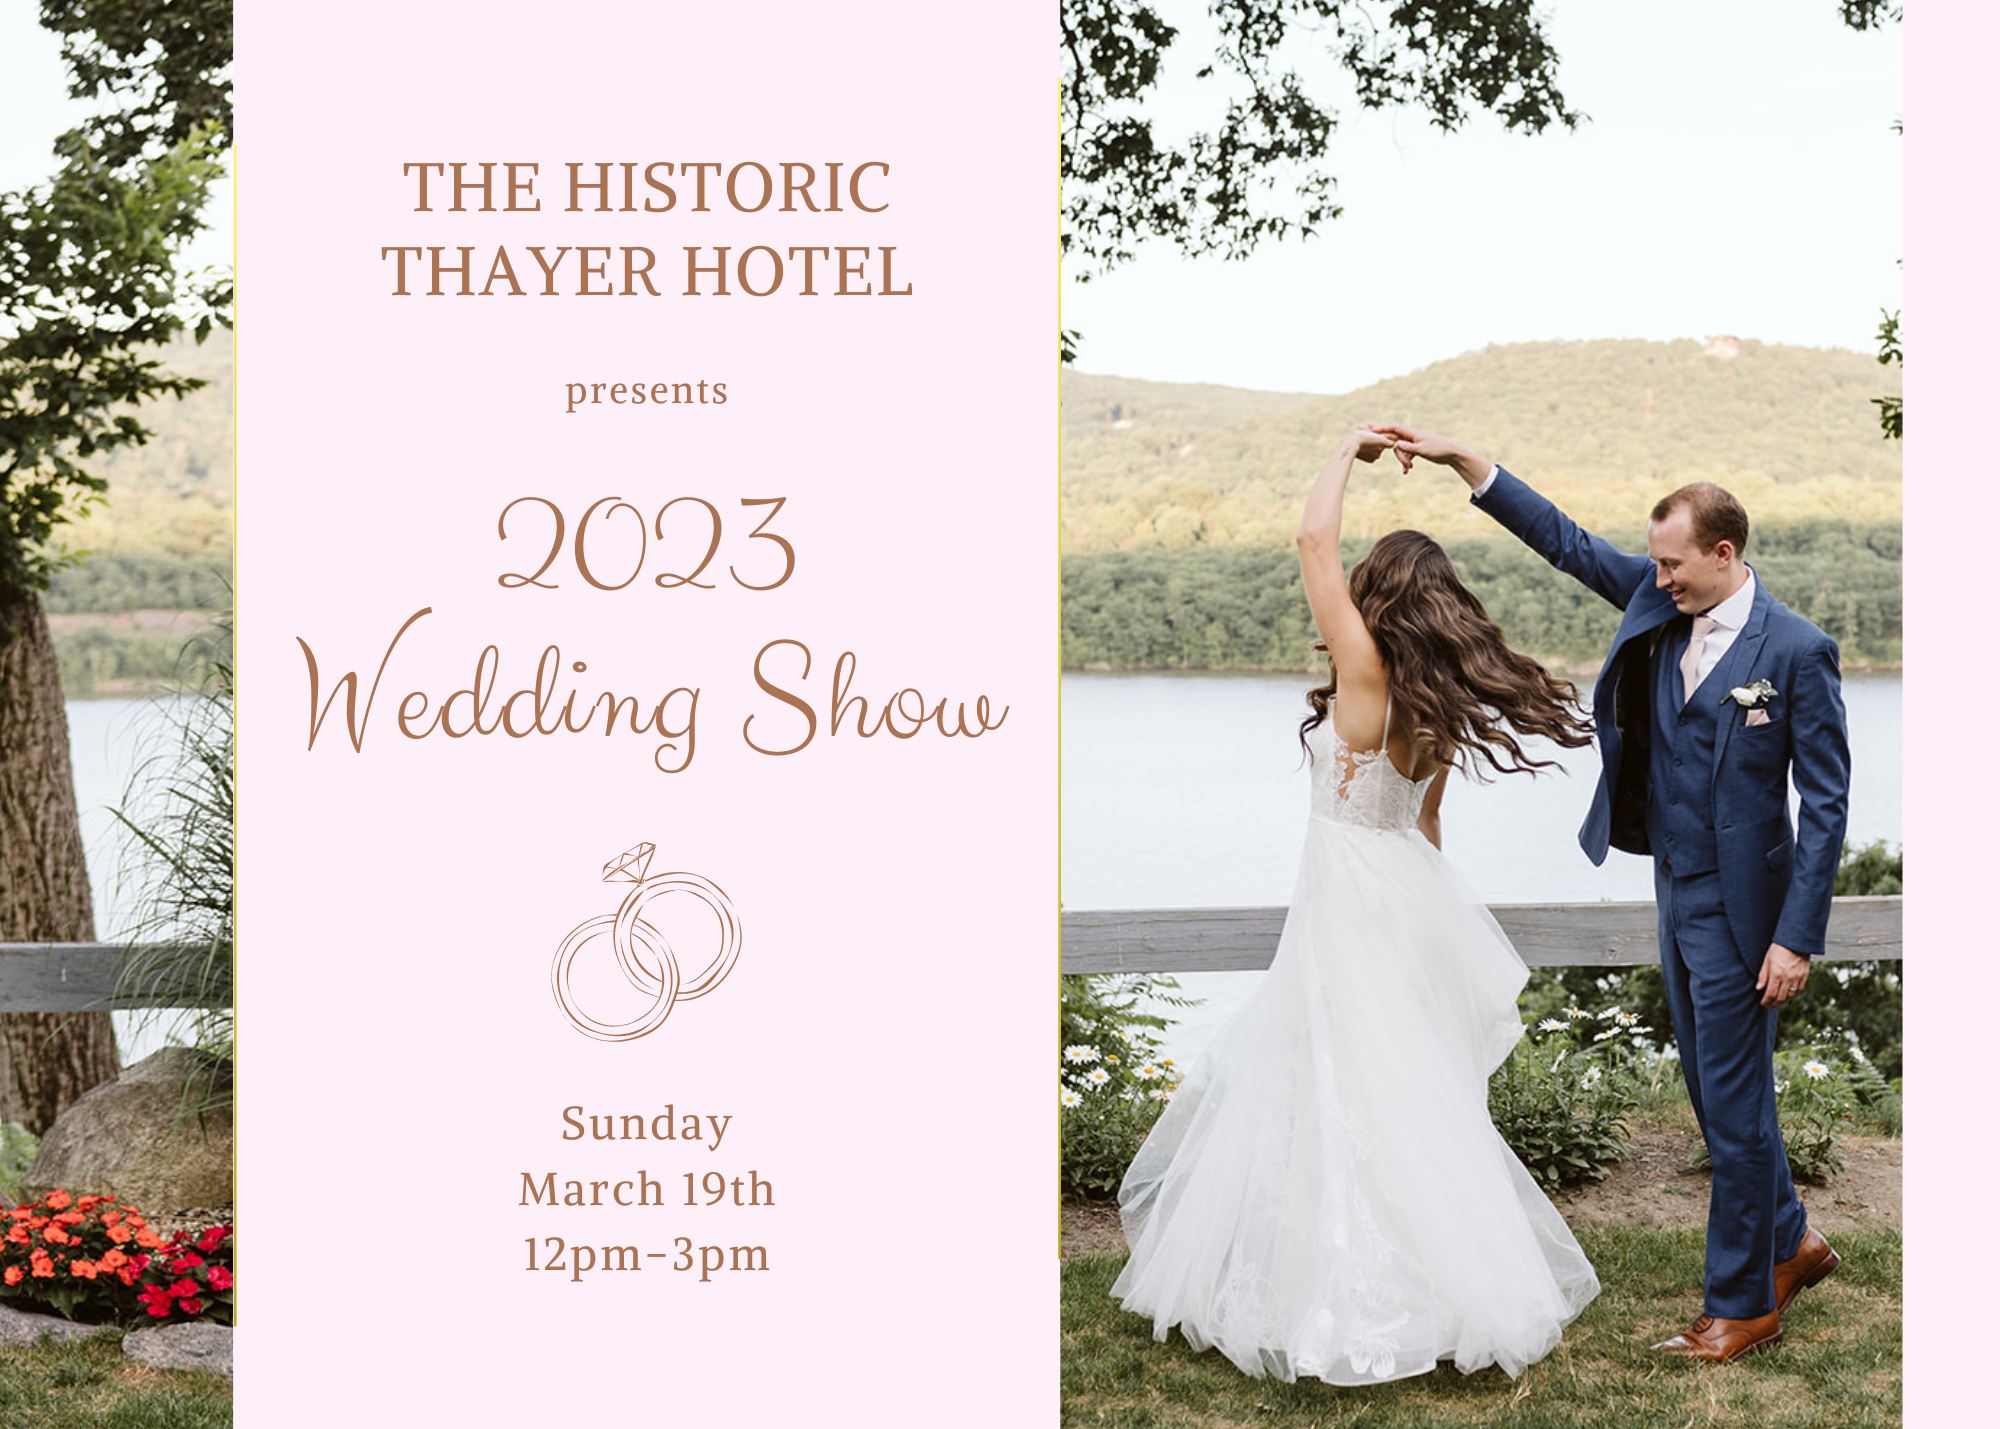 Thayer Hotel Wedding Show